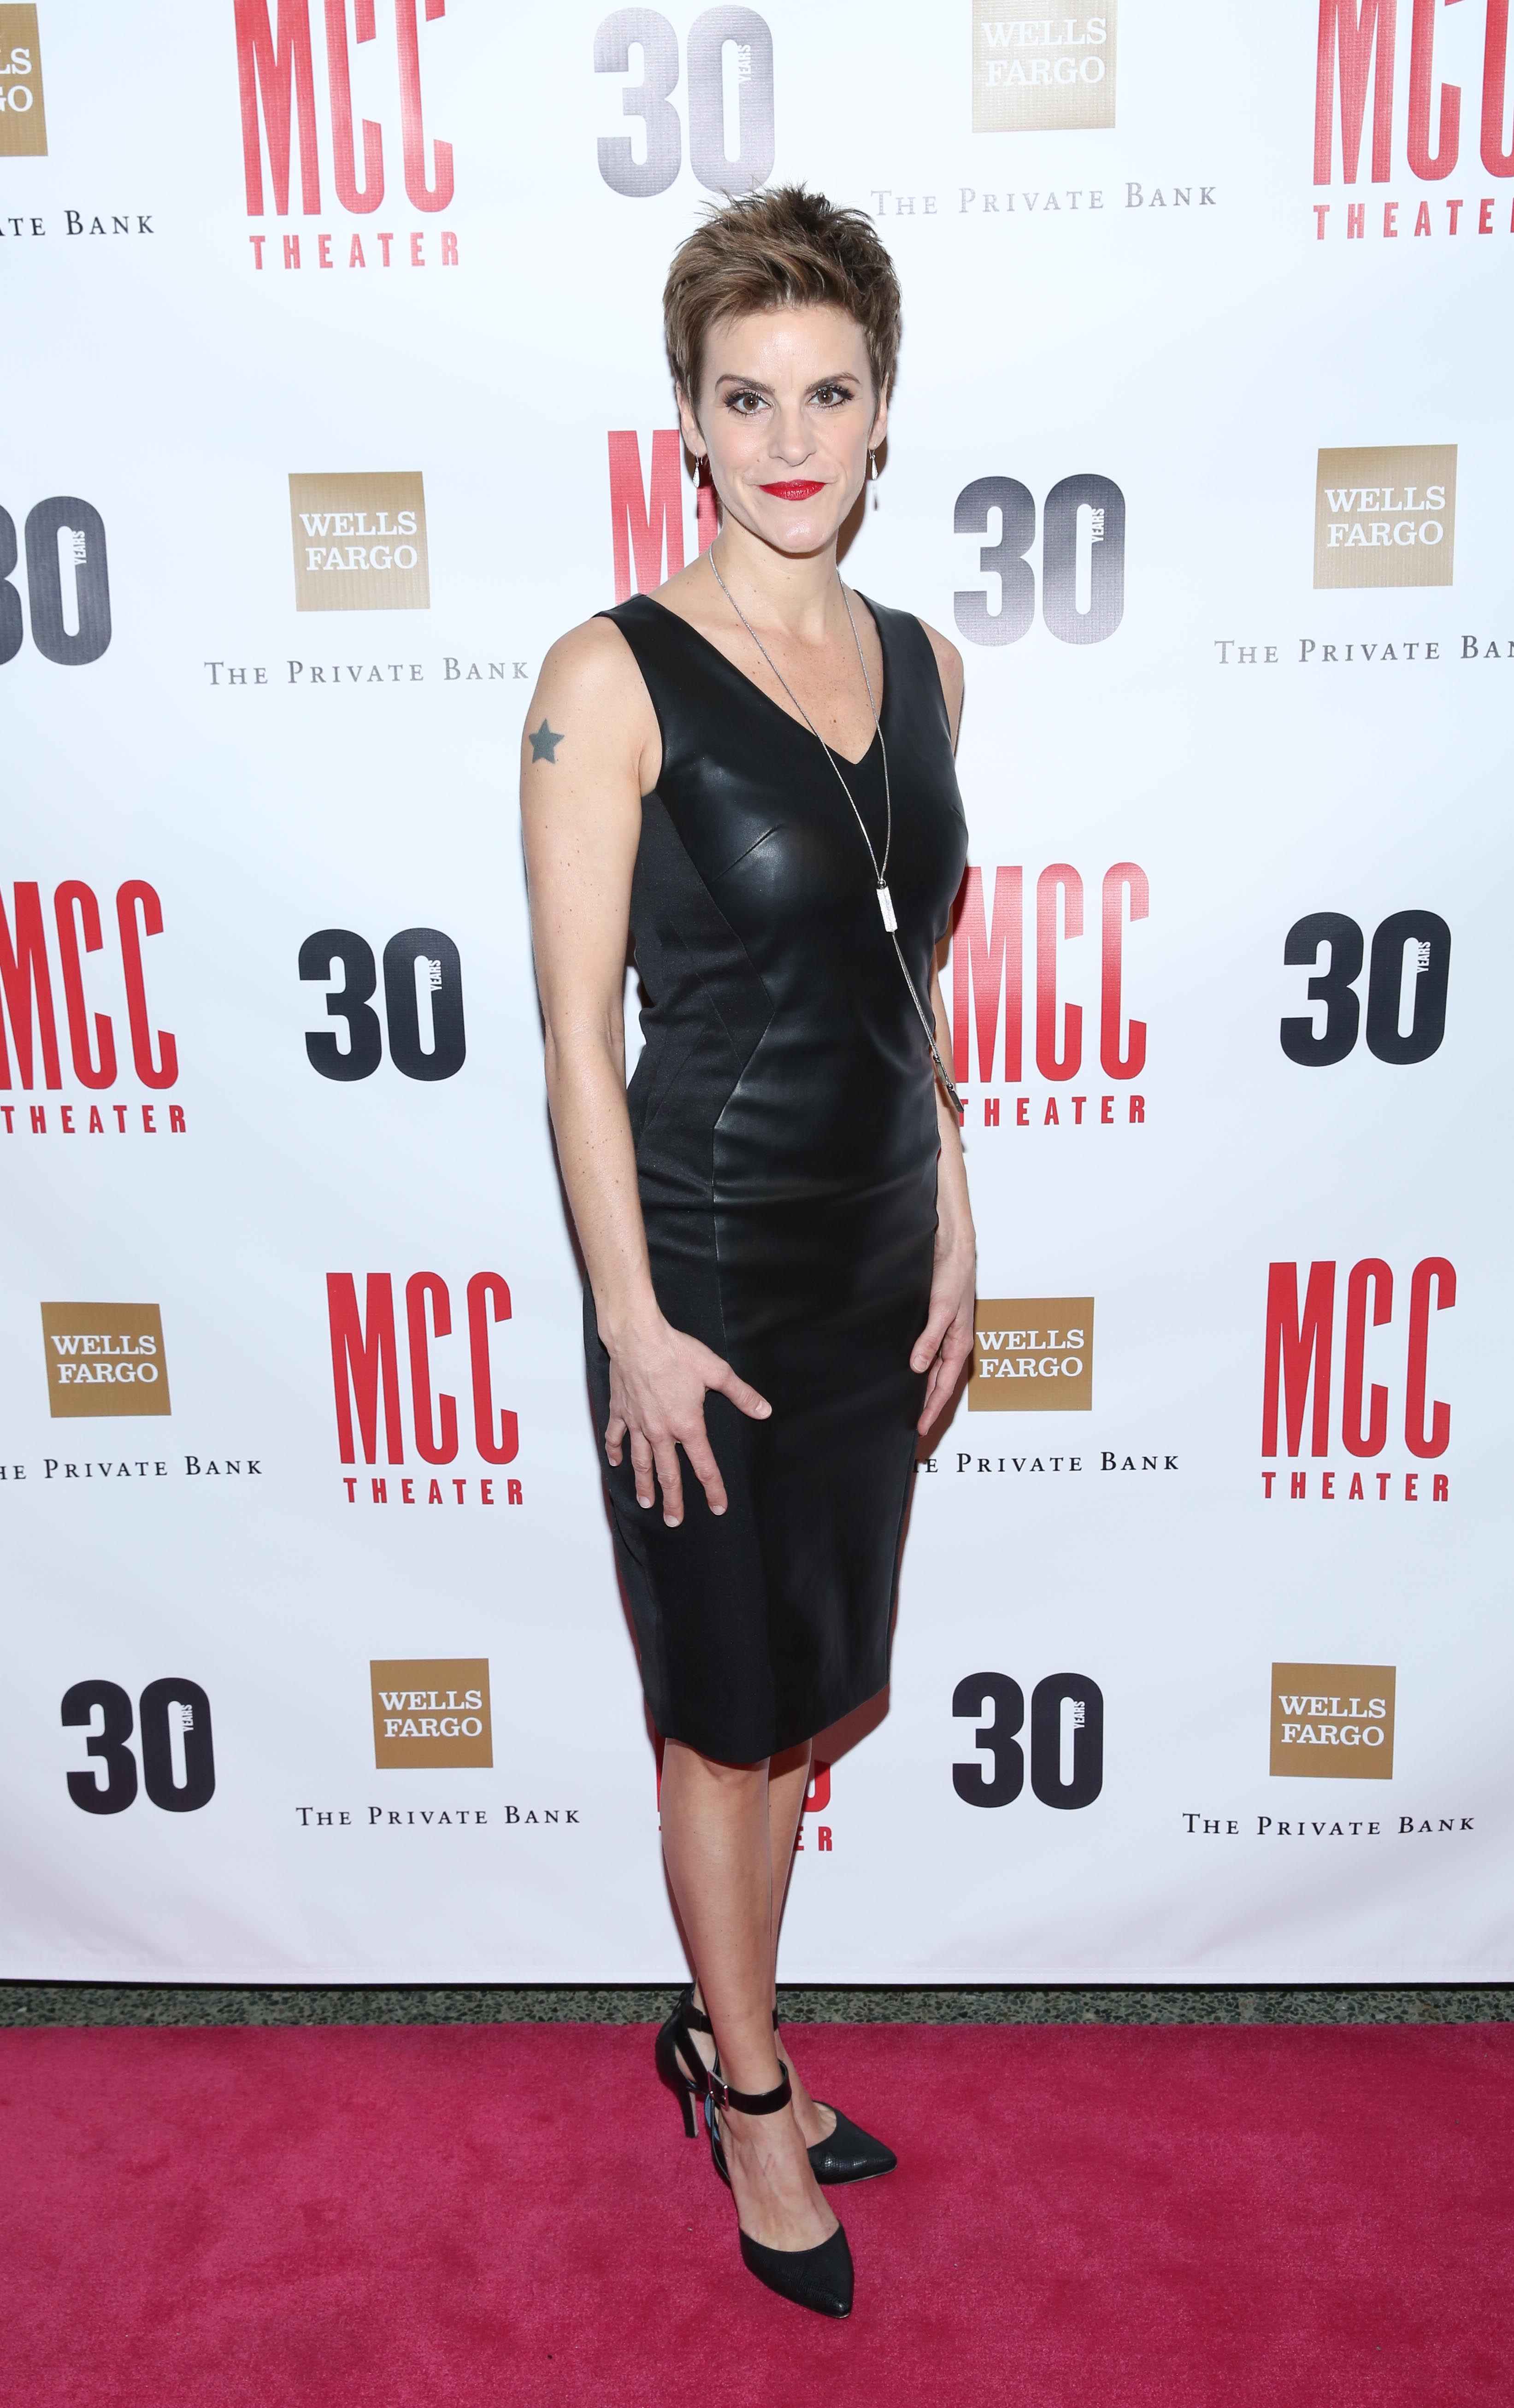 Jenn Colella attends MCC Theater’s Annual Miscast Gala